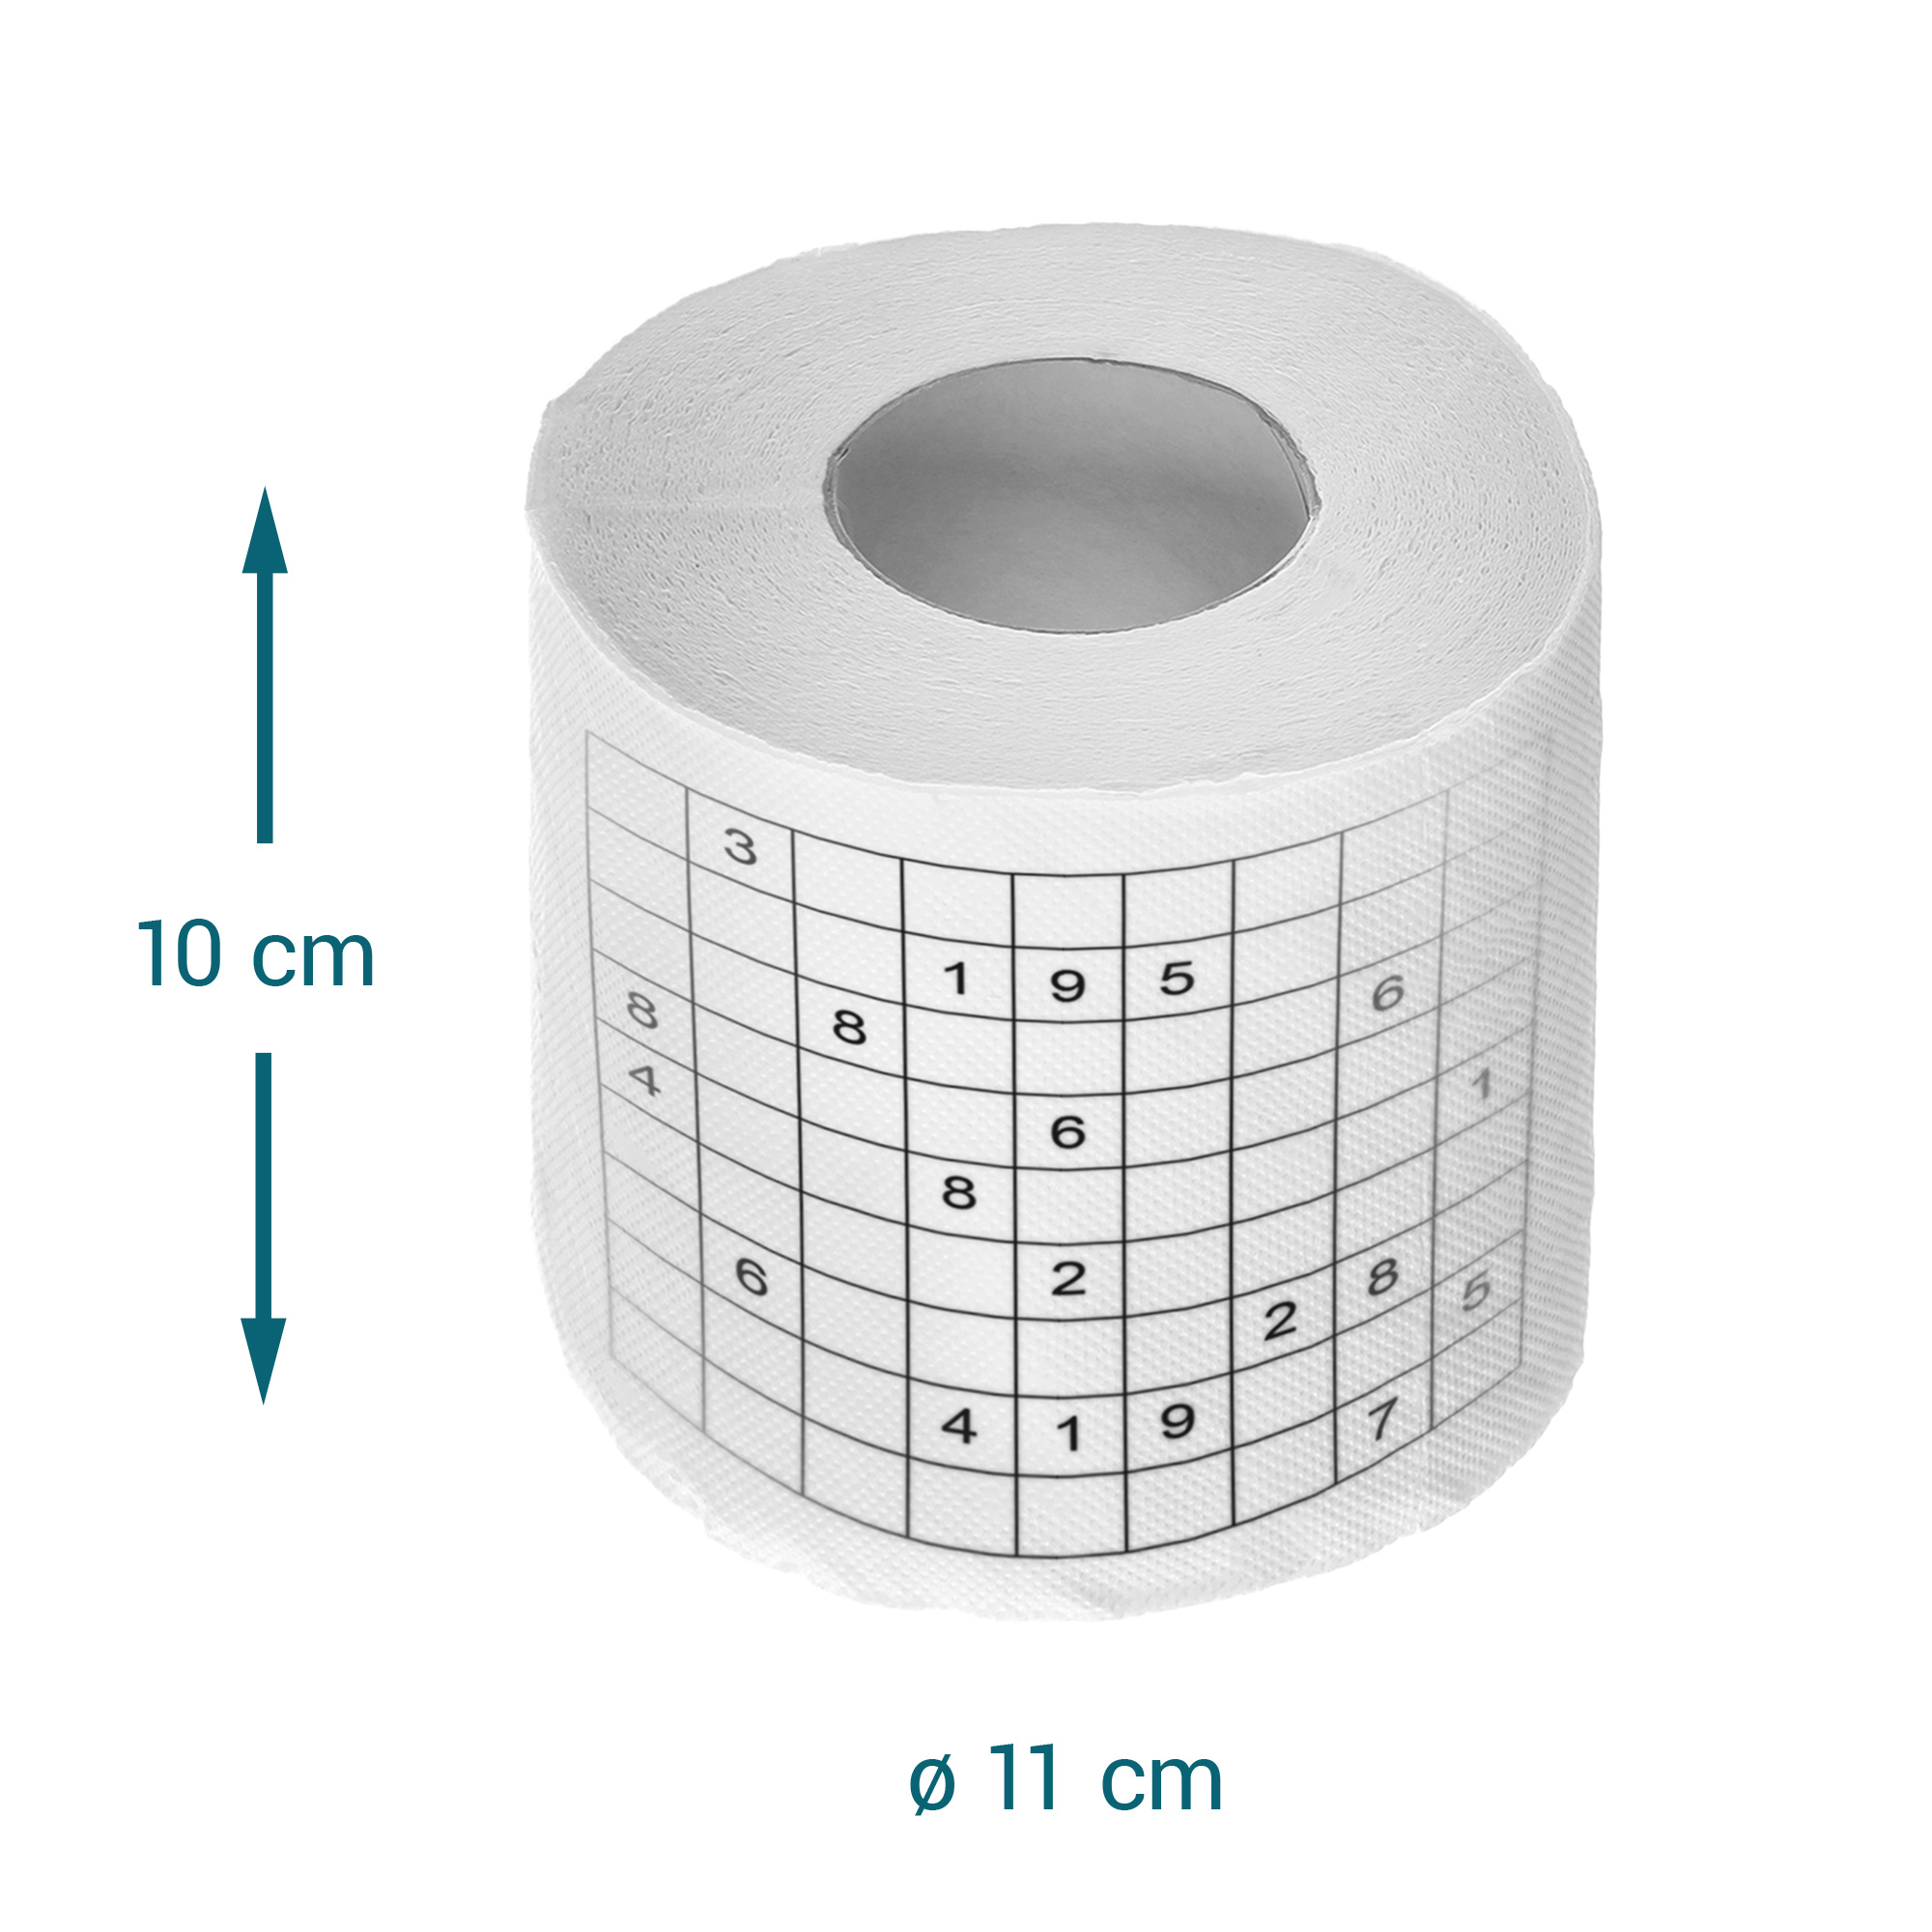 Toilettenpapier Sudoku im 3er Set